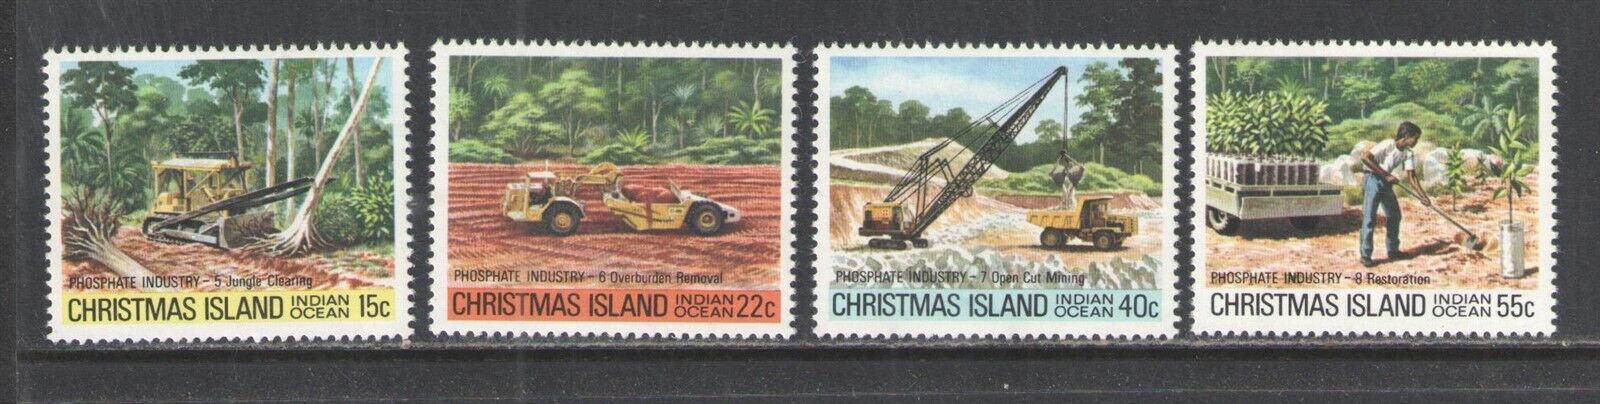 1980 Christmas Island Scott # 99-102 Complete Stamp Set Mnh